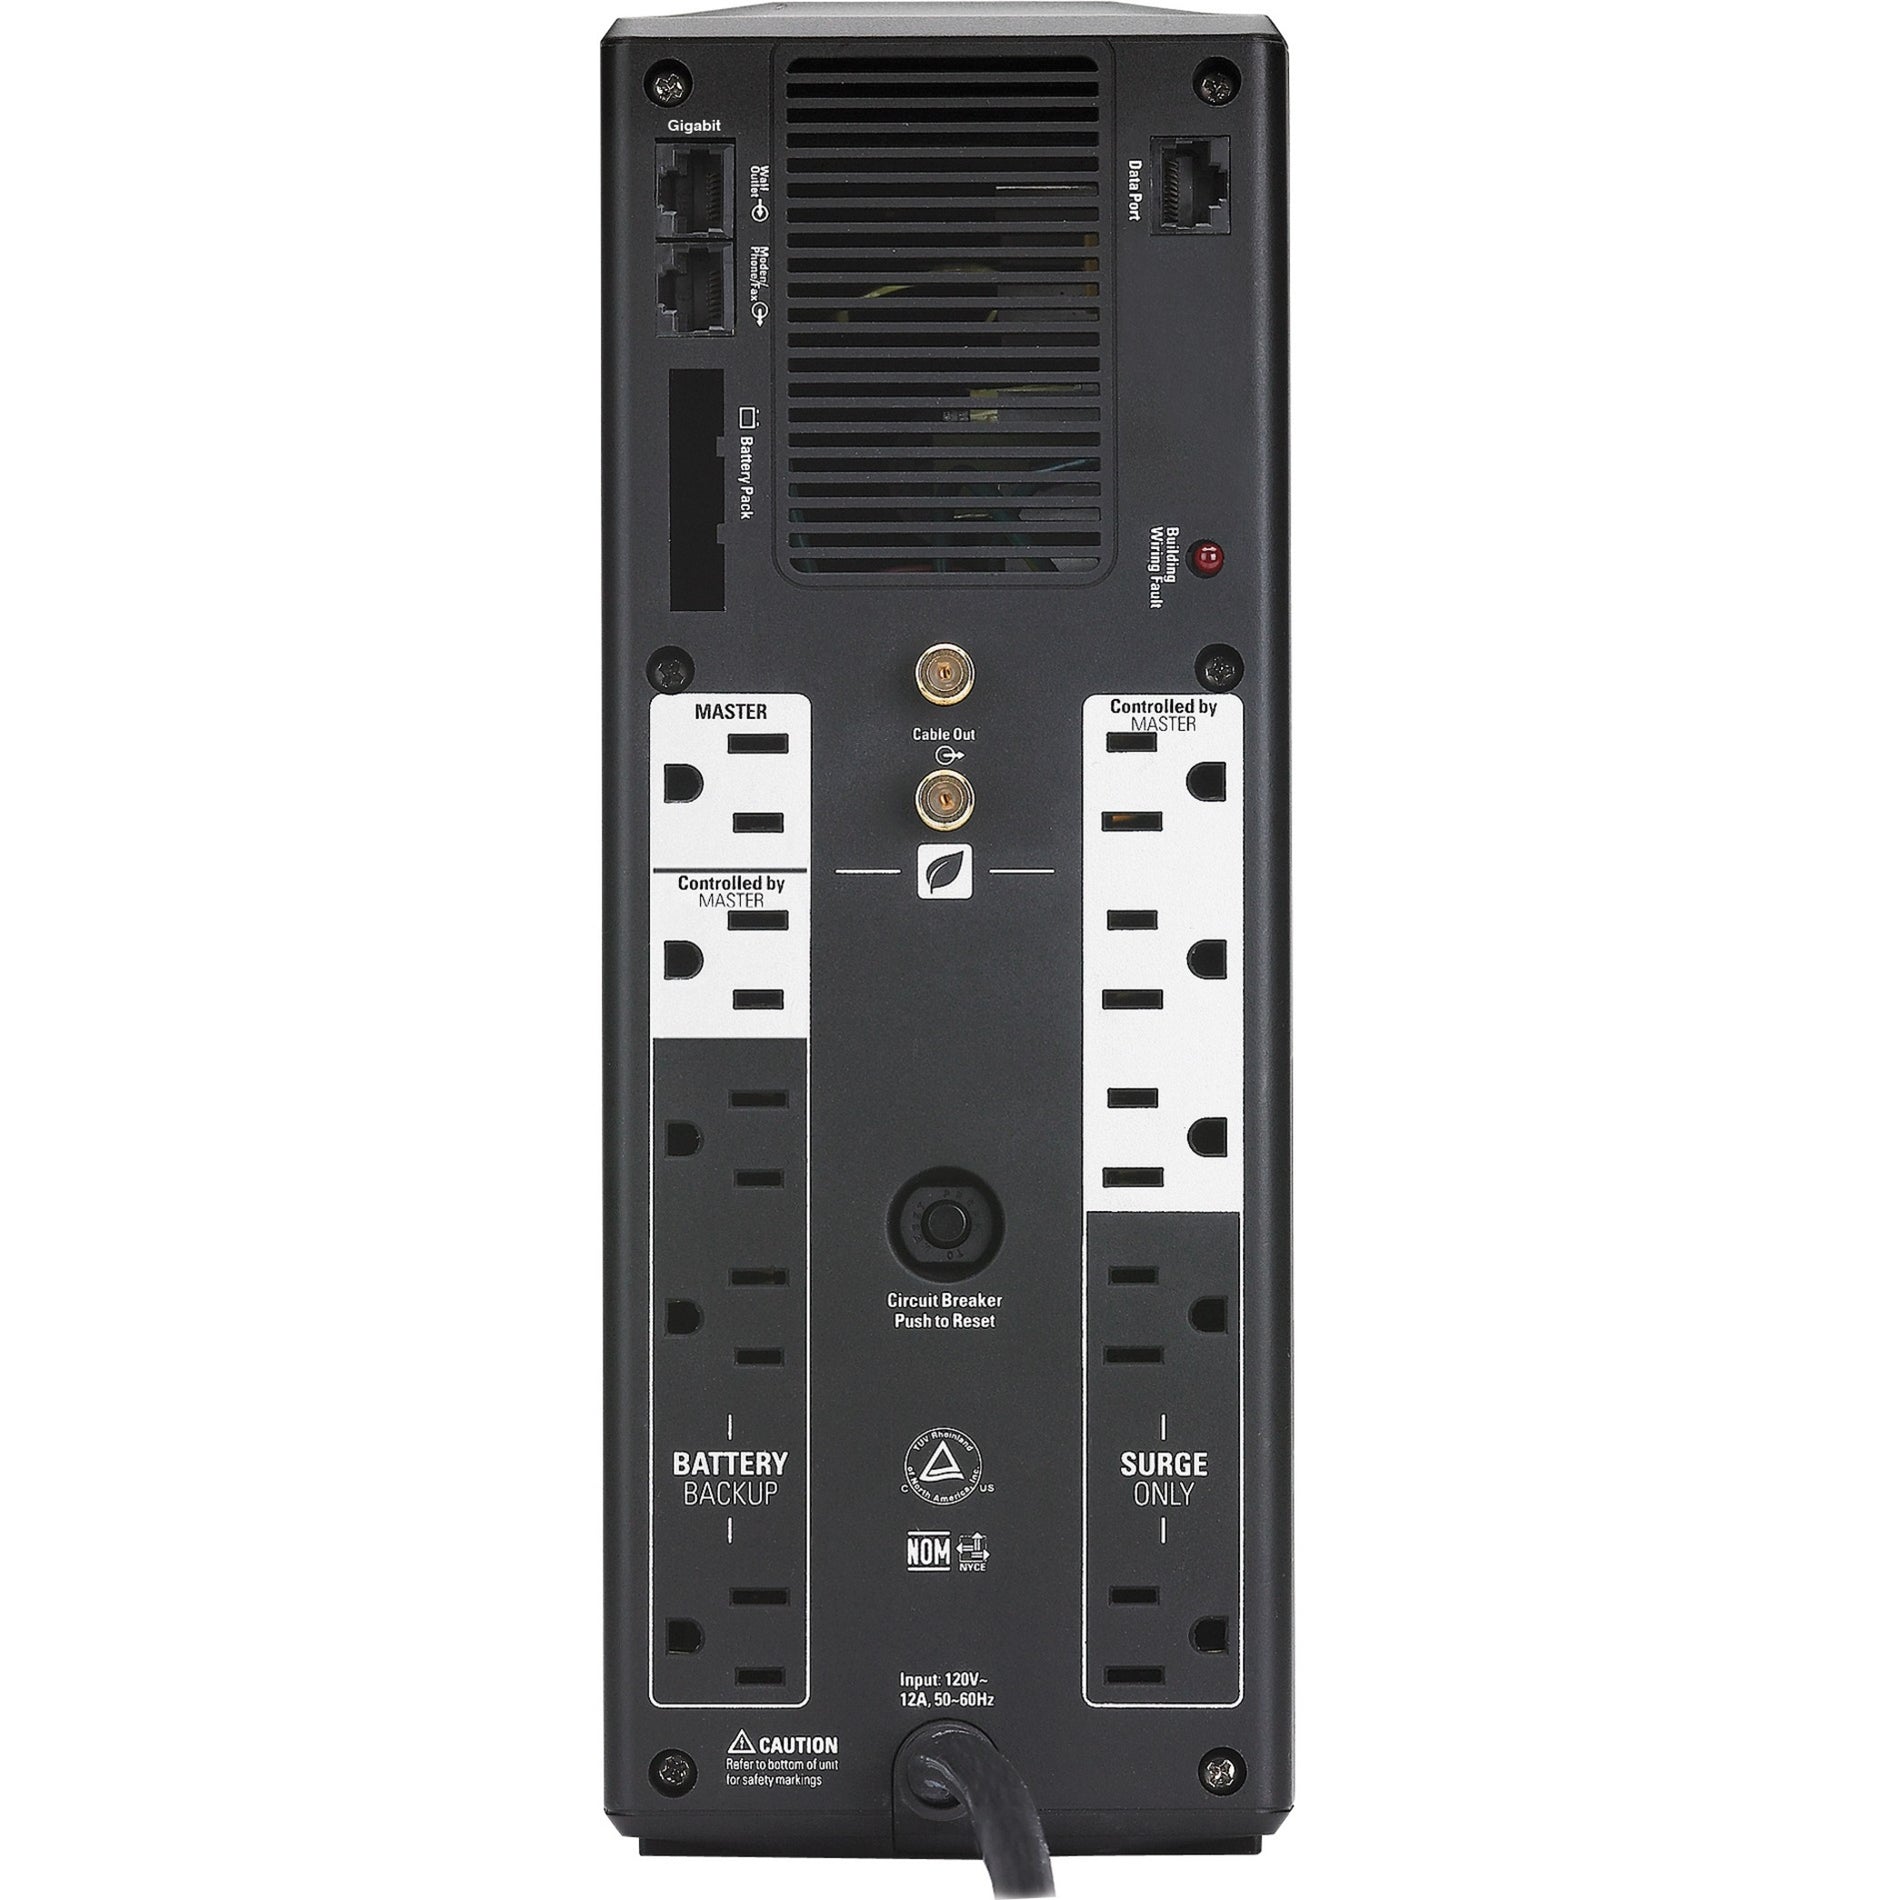 APC Power Saving Back-UPS Pro 1500 (BR1500G) – Network Hardwares